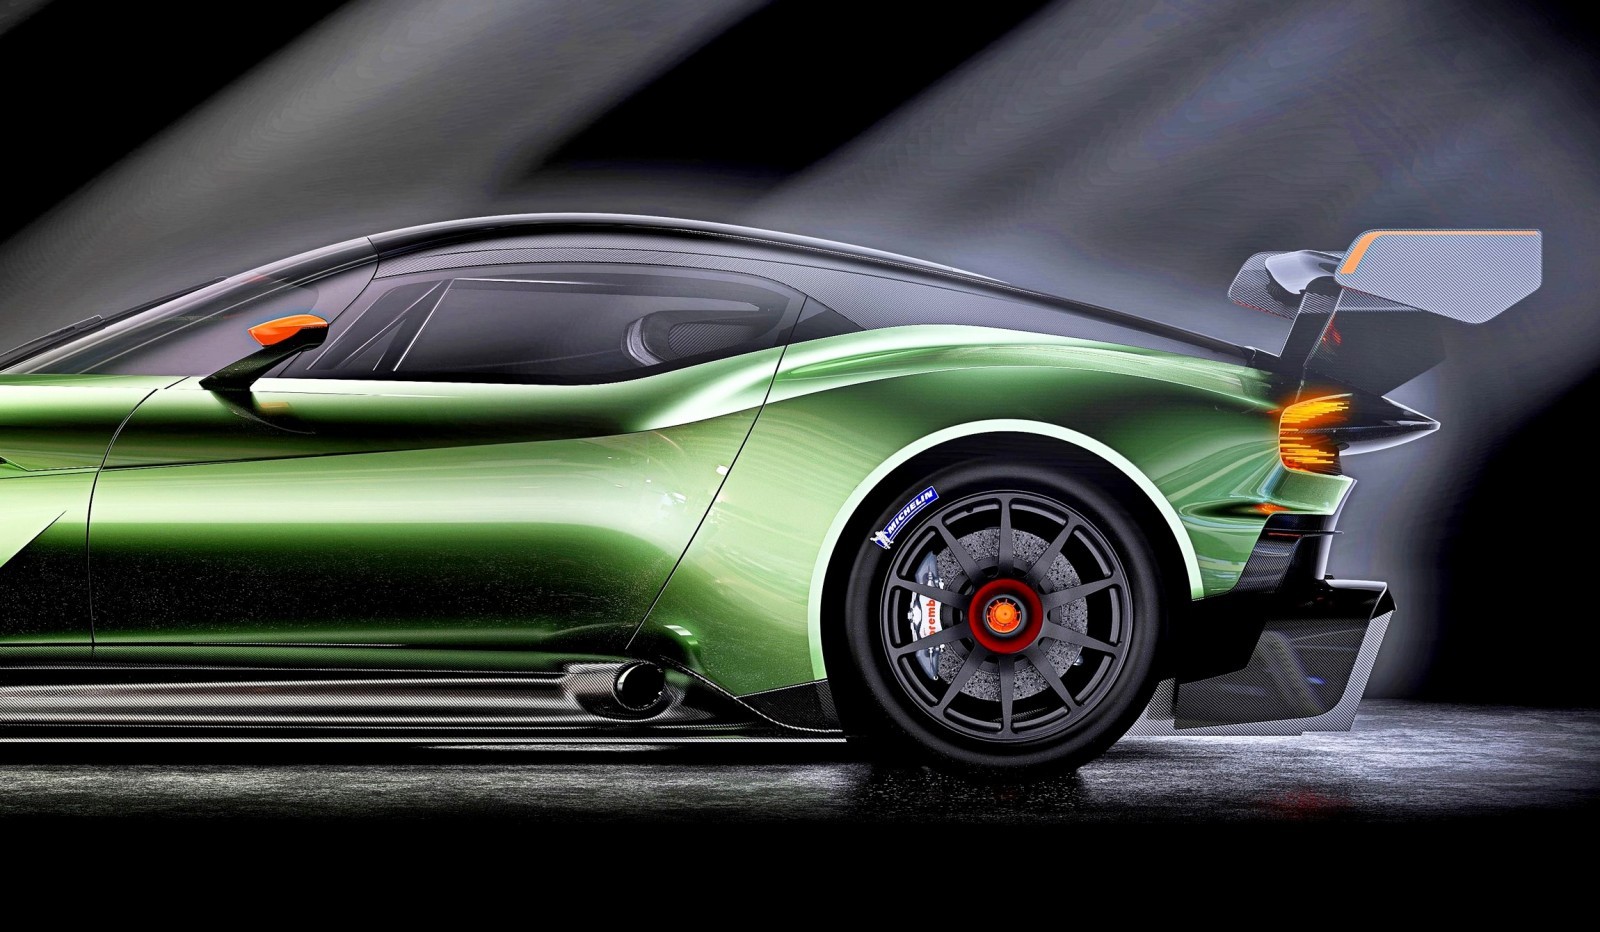 Unstoppable Power: The 2016 Aston Martin Vulcan